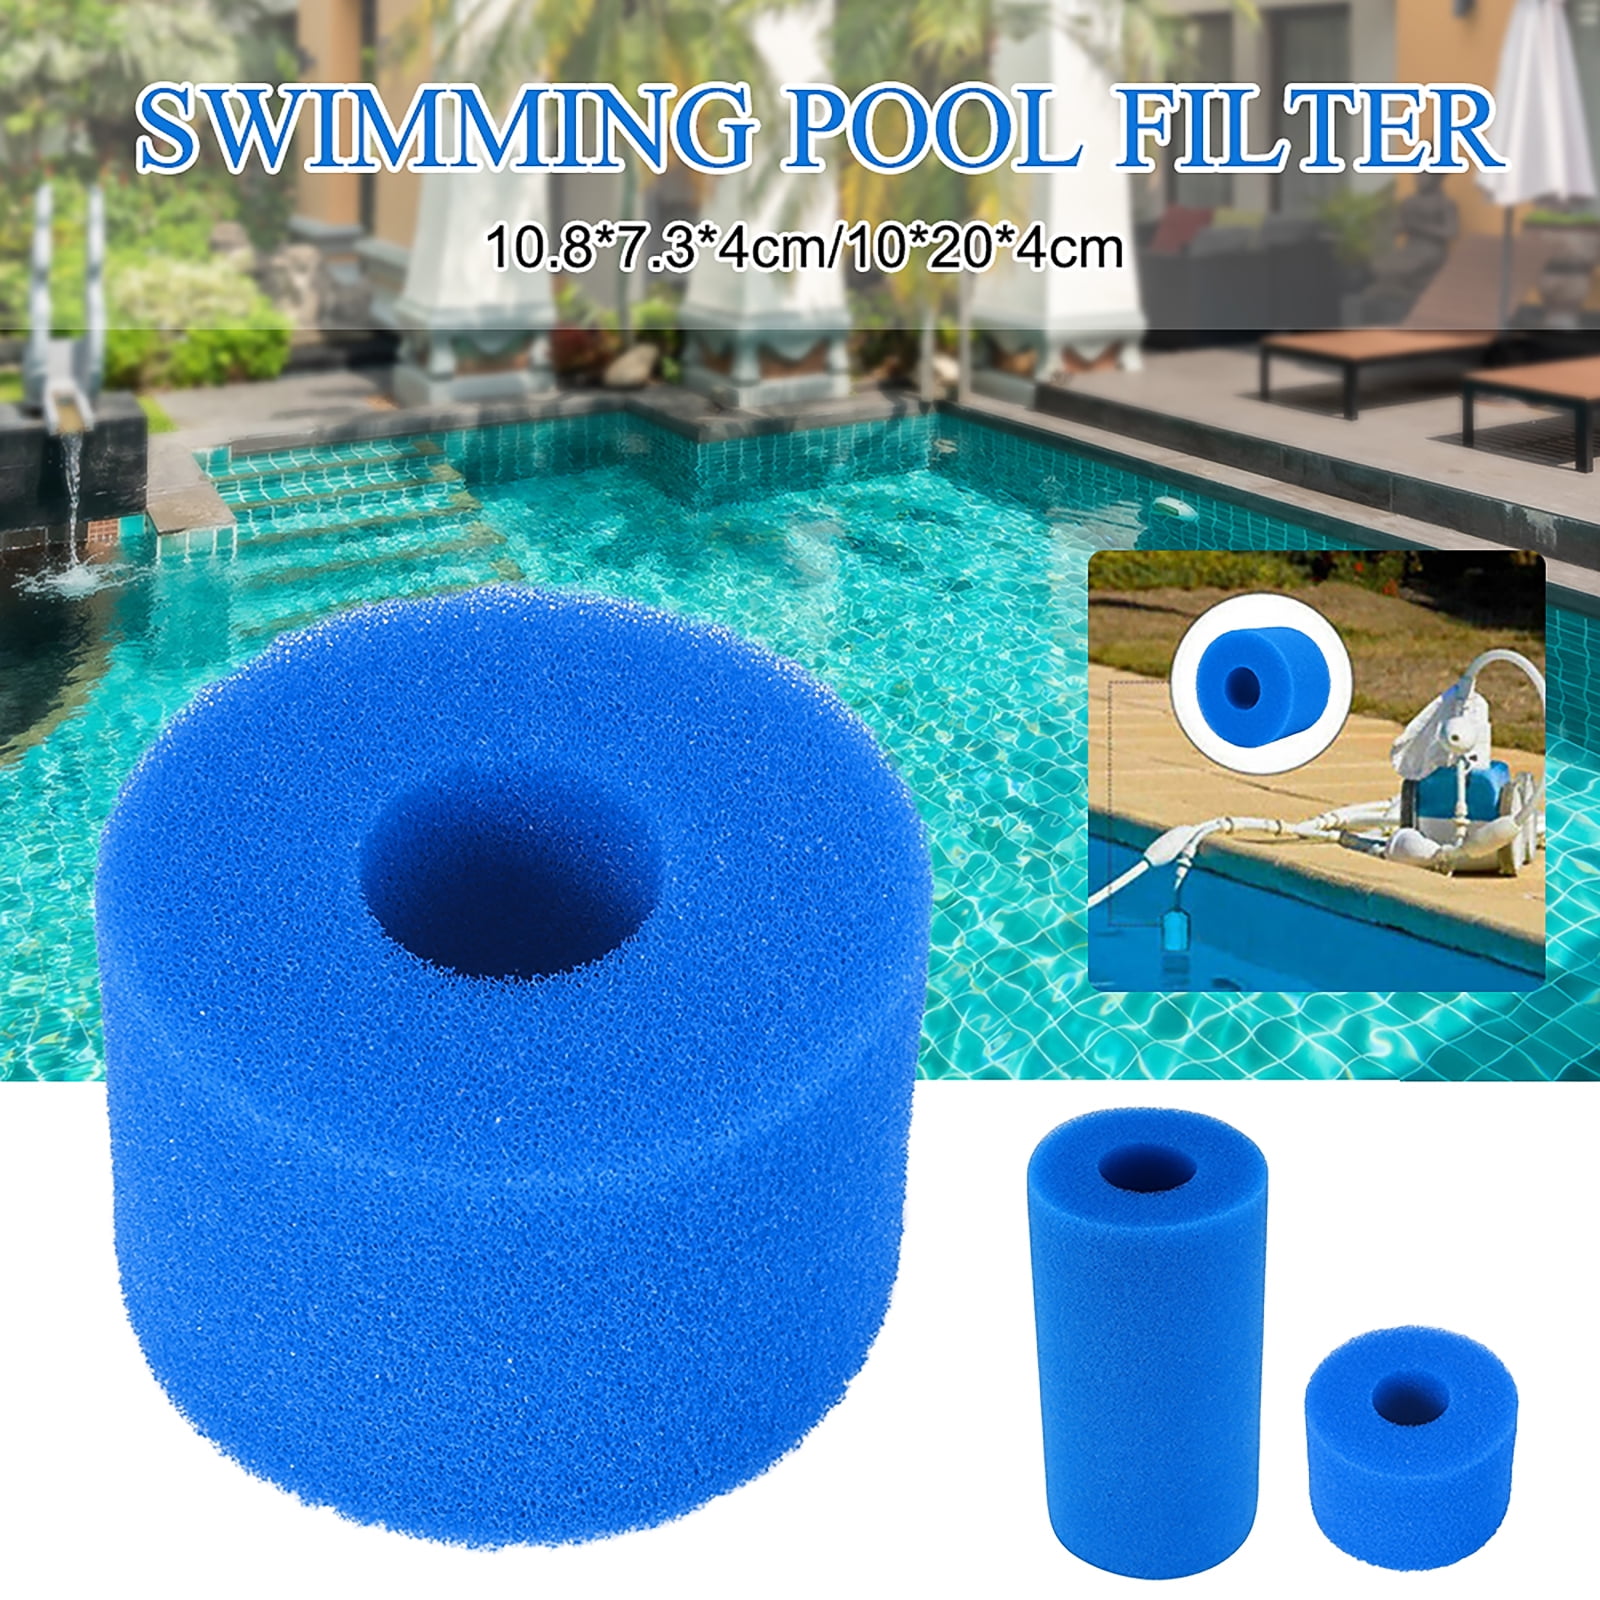 Reusable & Washable Swimming-Pool Filter Foam Sponge Cartridge For Intex Type A